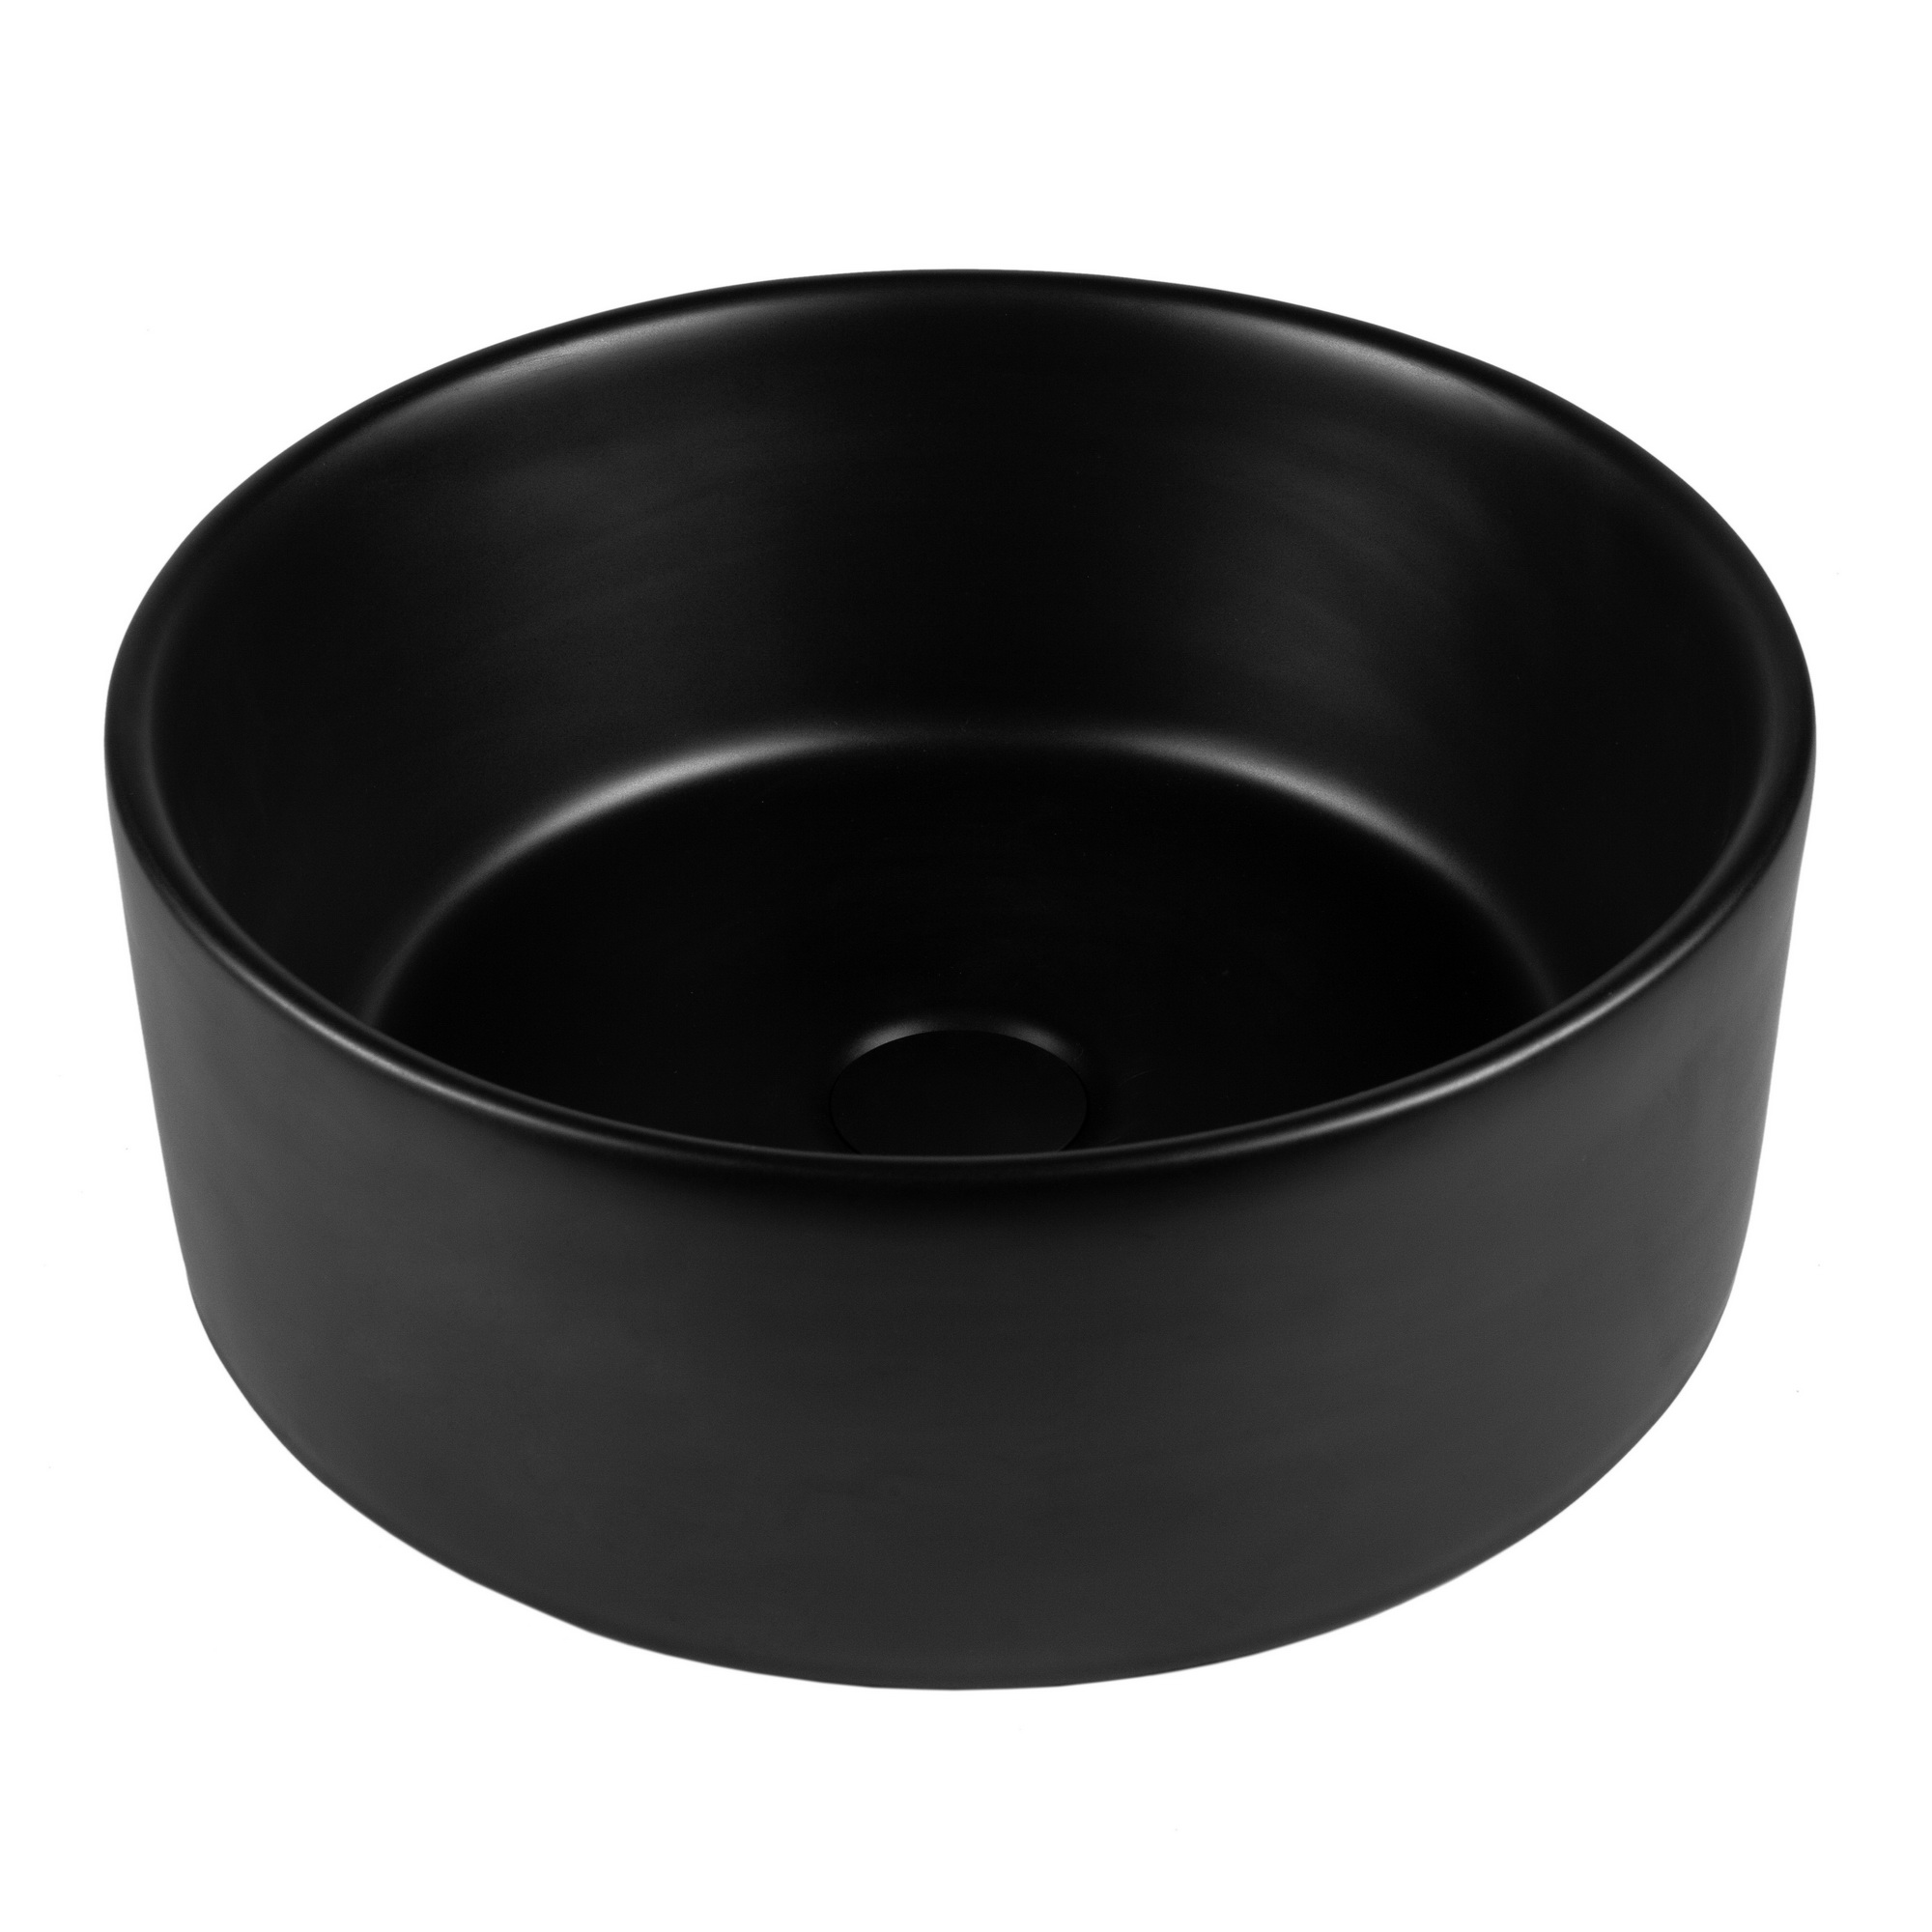 Раковина накладная BOND S53-398 круглая 39*39*15см черная корзина для луковичных круглая черная